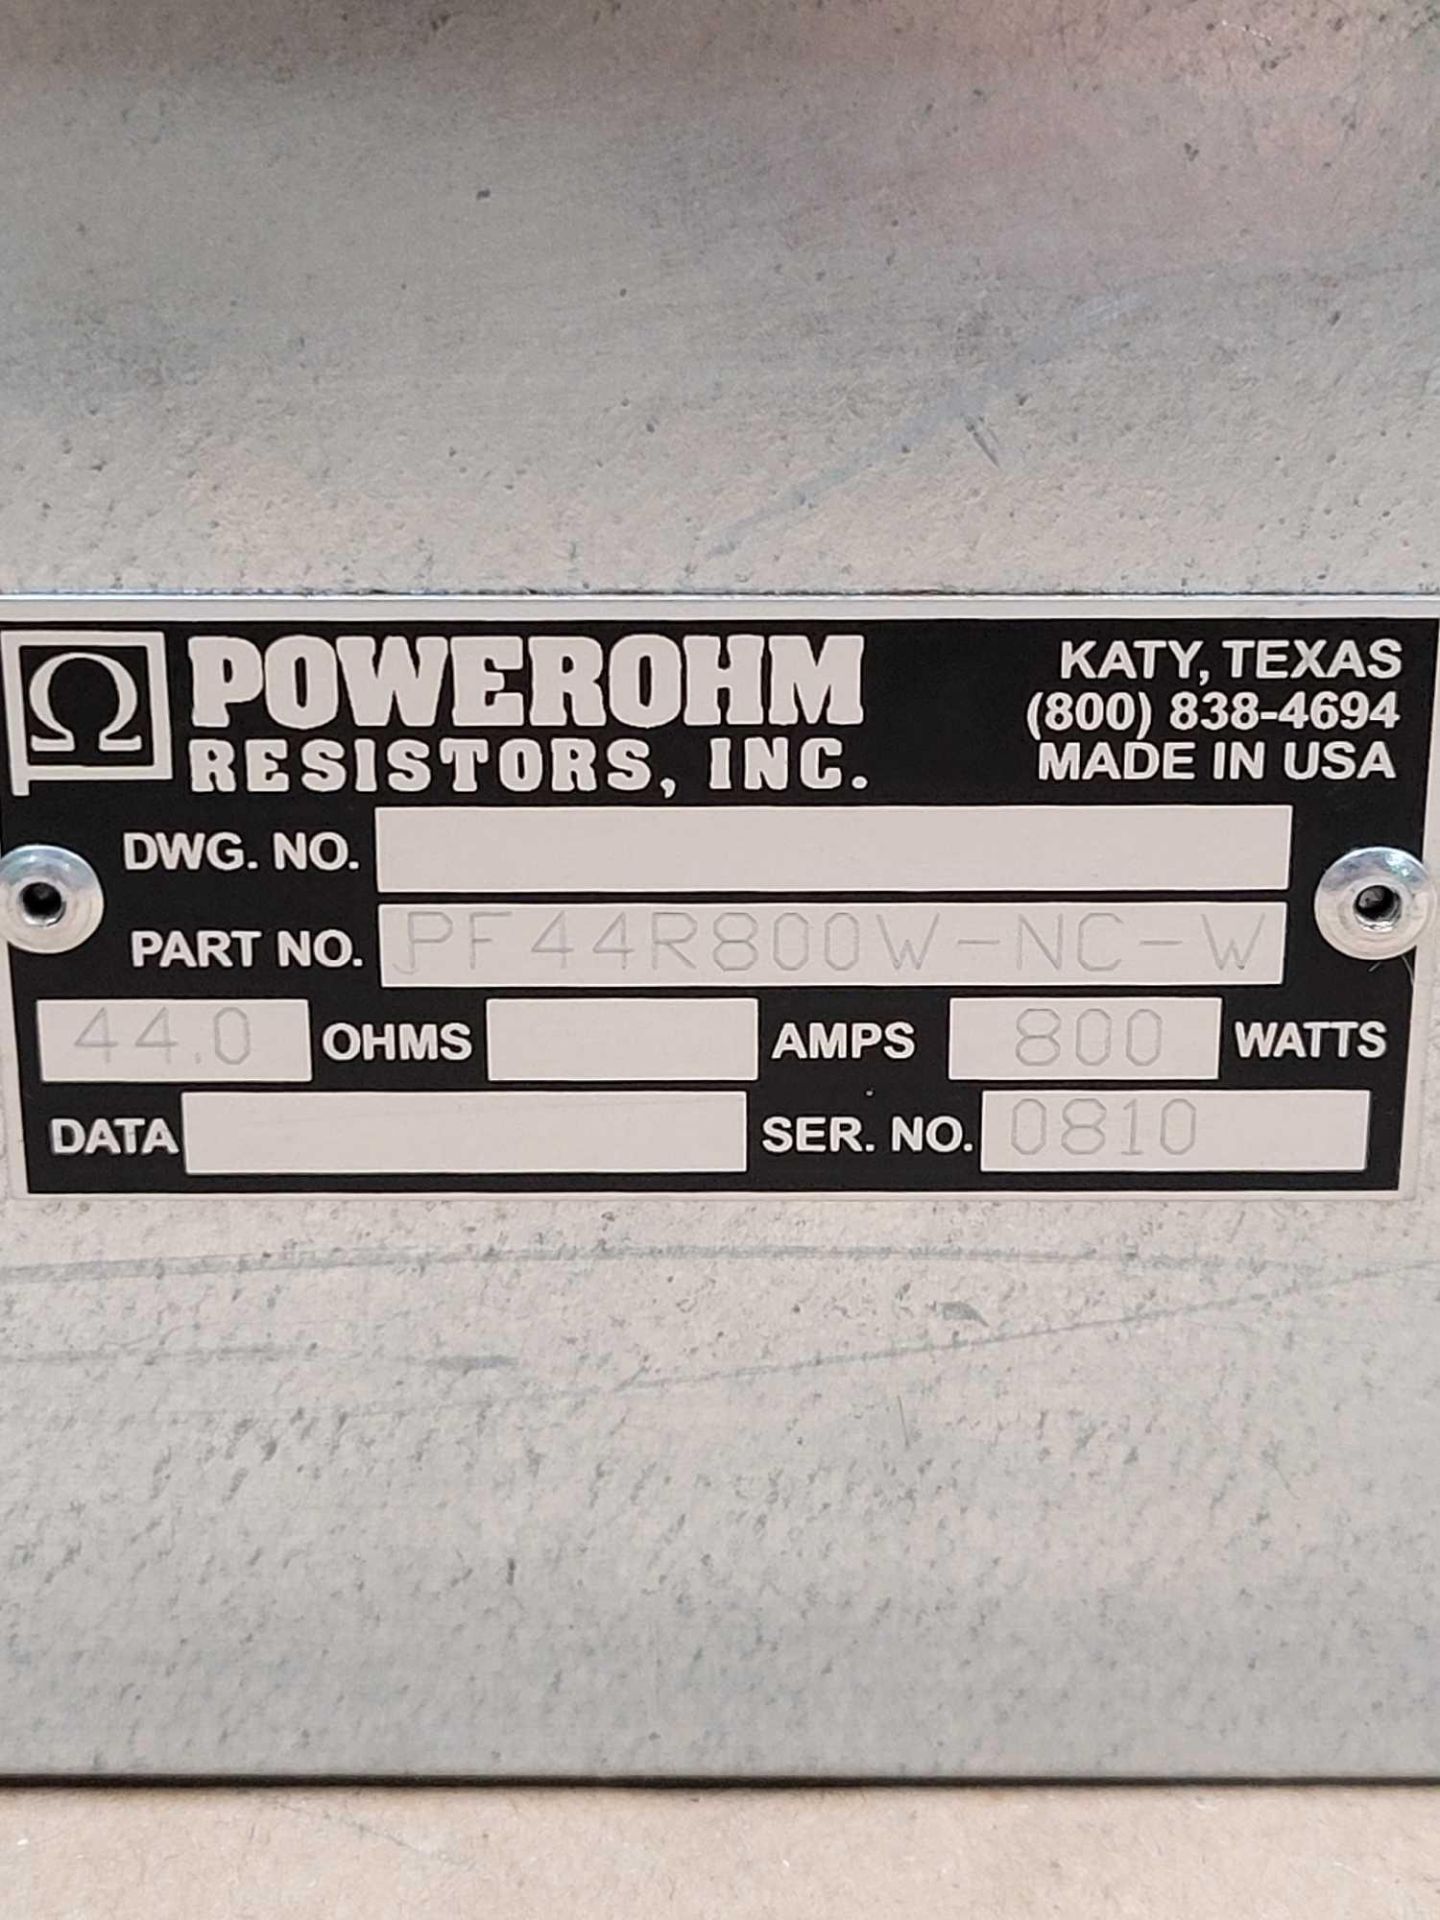 LOT OF 2 POWEROHM PF44R800W-NC-W / Braking Resistor  /  Lot Weight: 16.2 lbs - Image 2 of 4